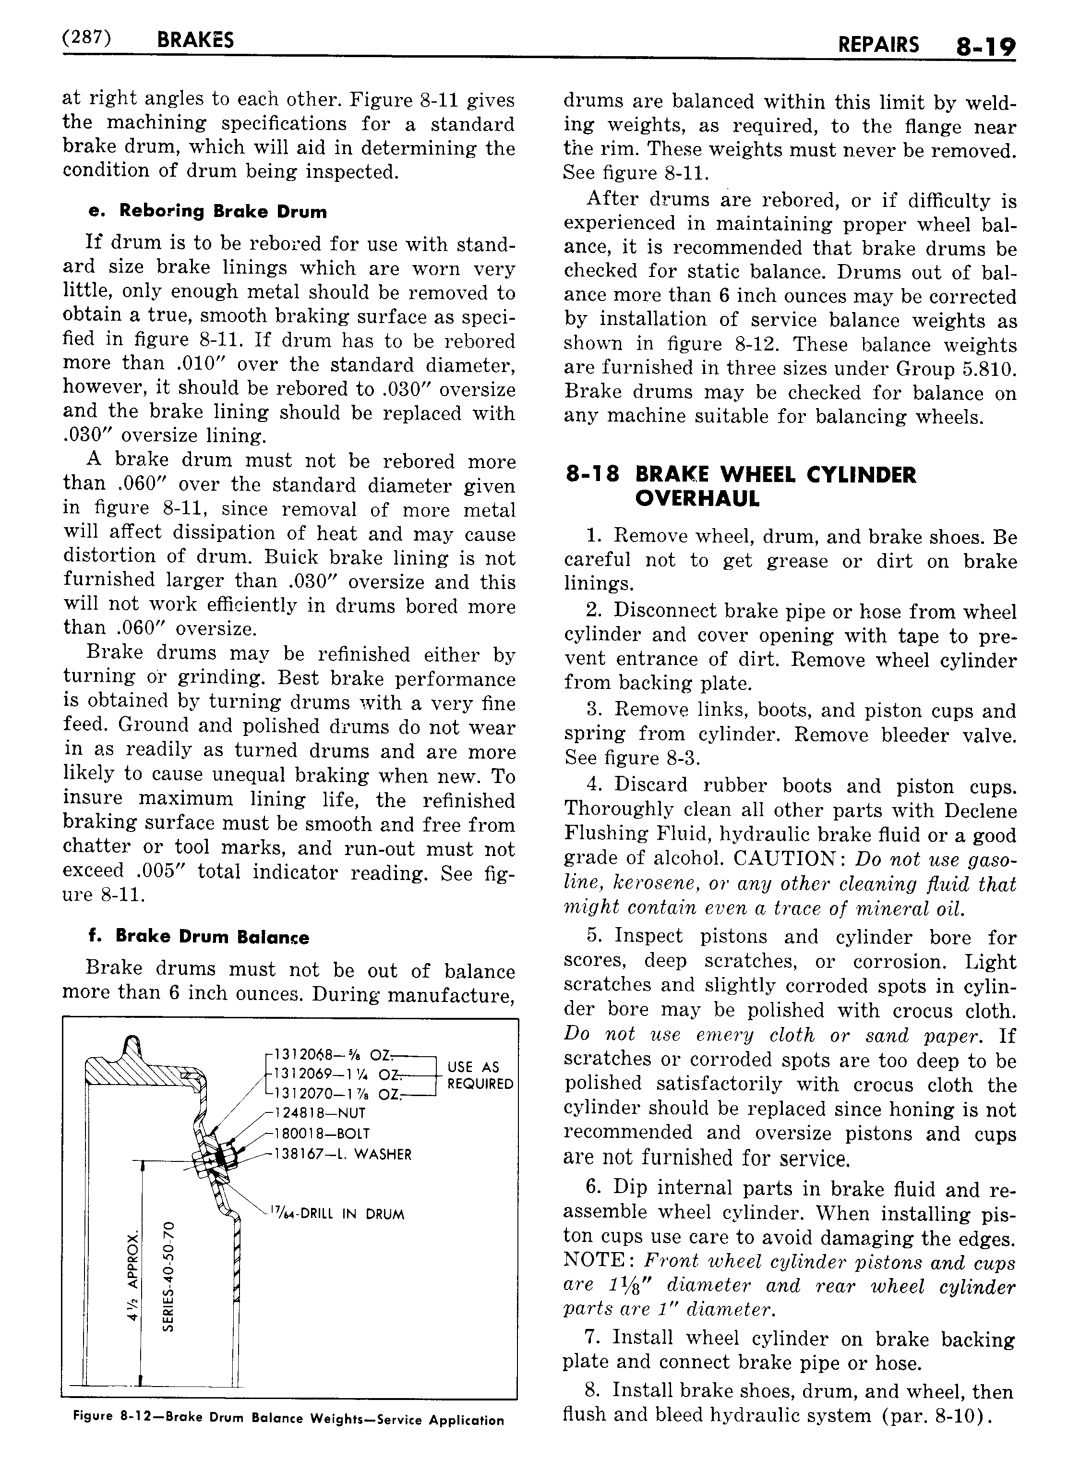 n_09 1951 Buick Shop Manual - Brakes-019-019.jpg